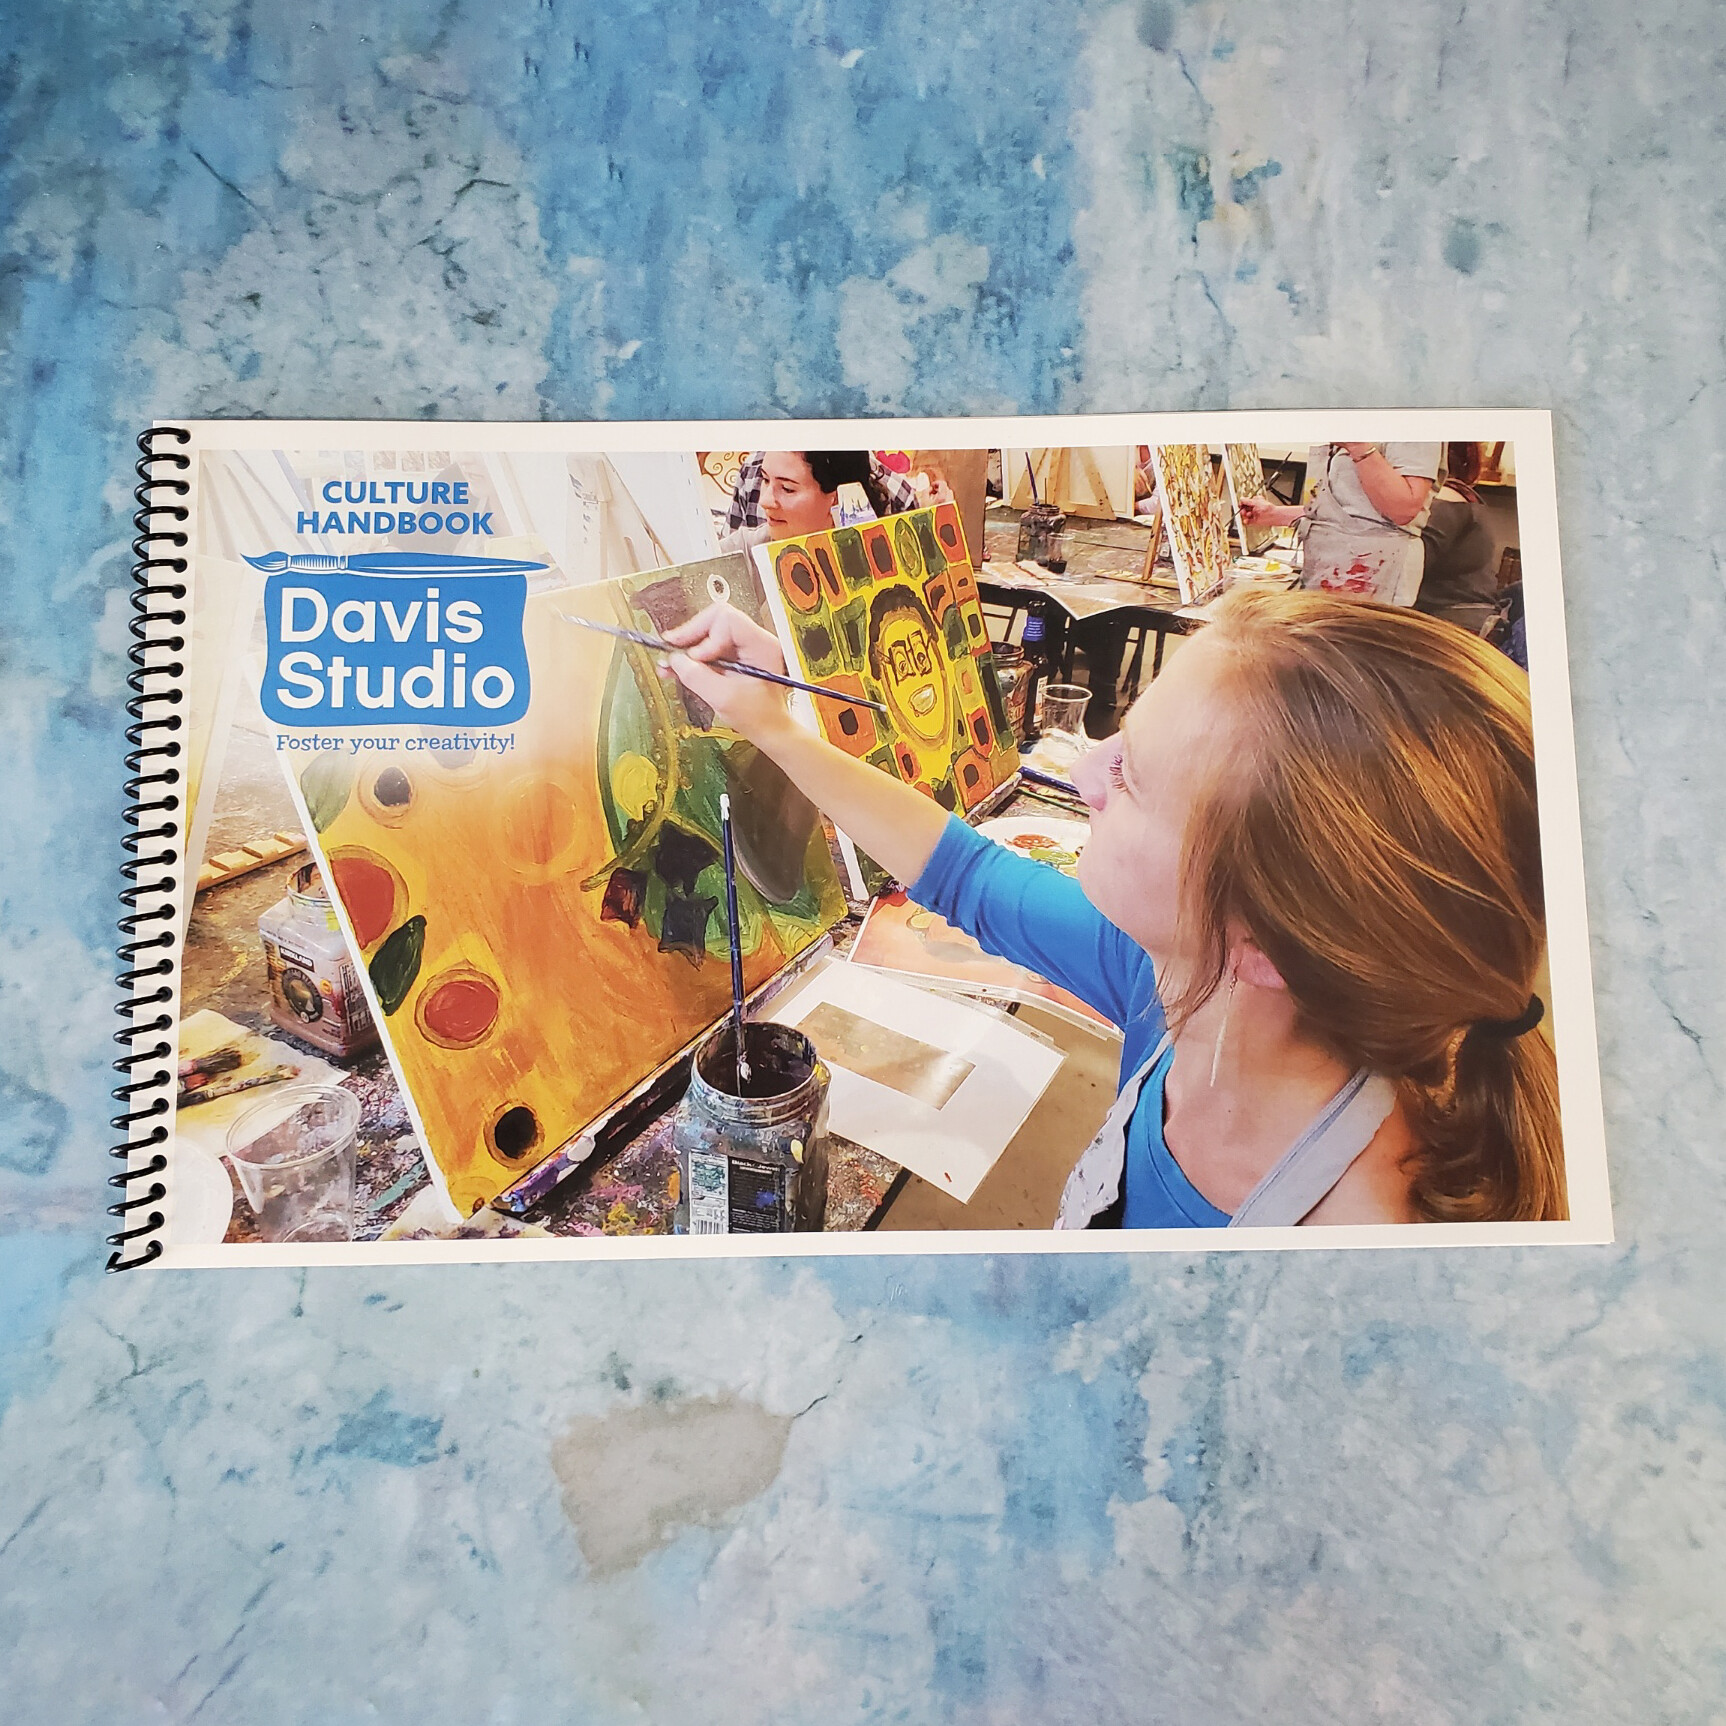 Culture Handbook Presentation for Davis Studio - Black Coil Binding - Design by Caroline Matte